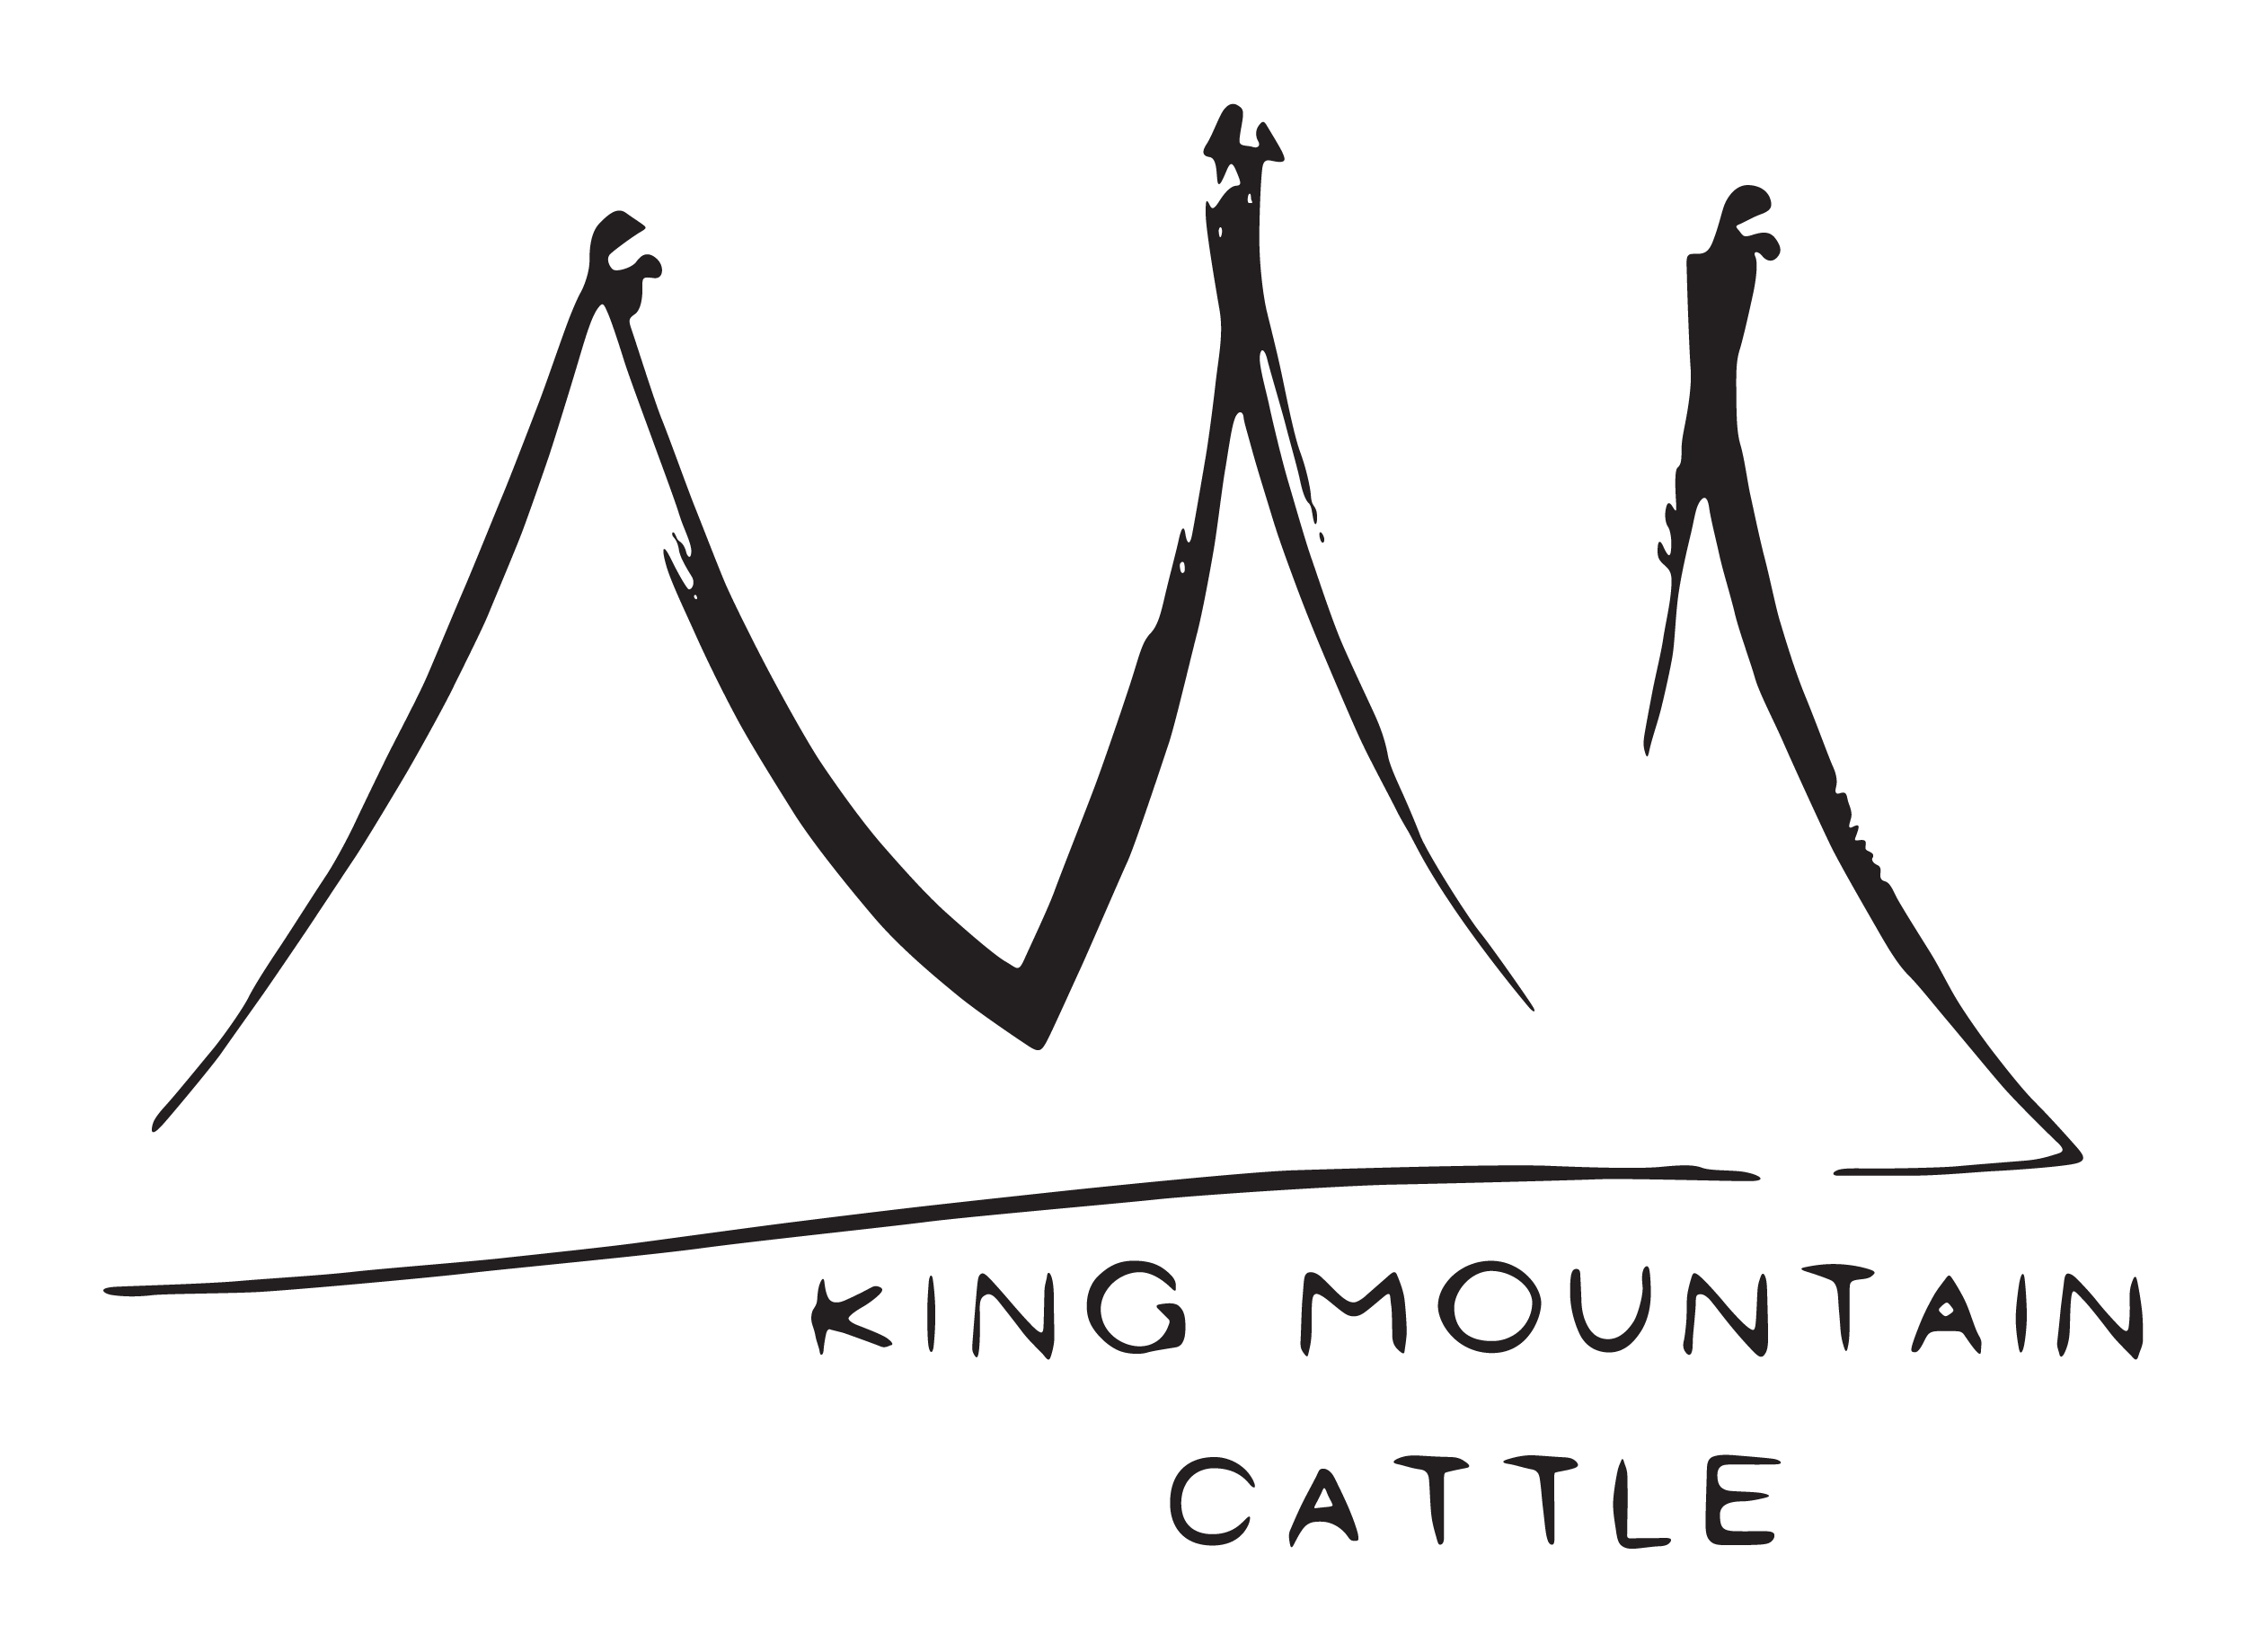 King Mountain Cattle